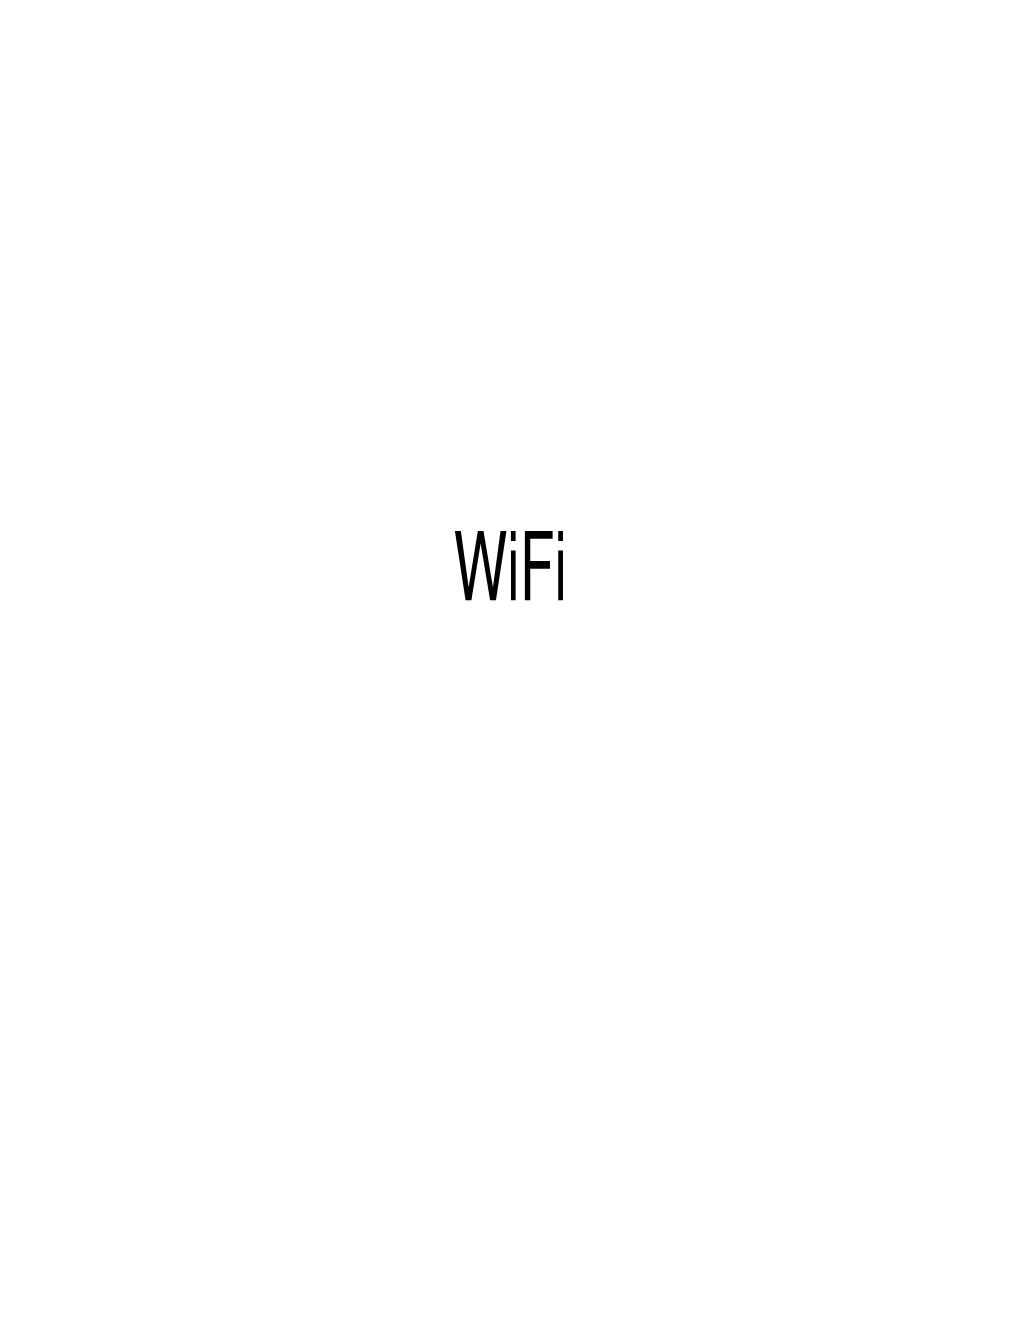 Wifi (IEEE 802.11 A/B/G/N) and Wireless Metropolitan Area Networks